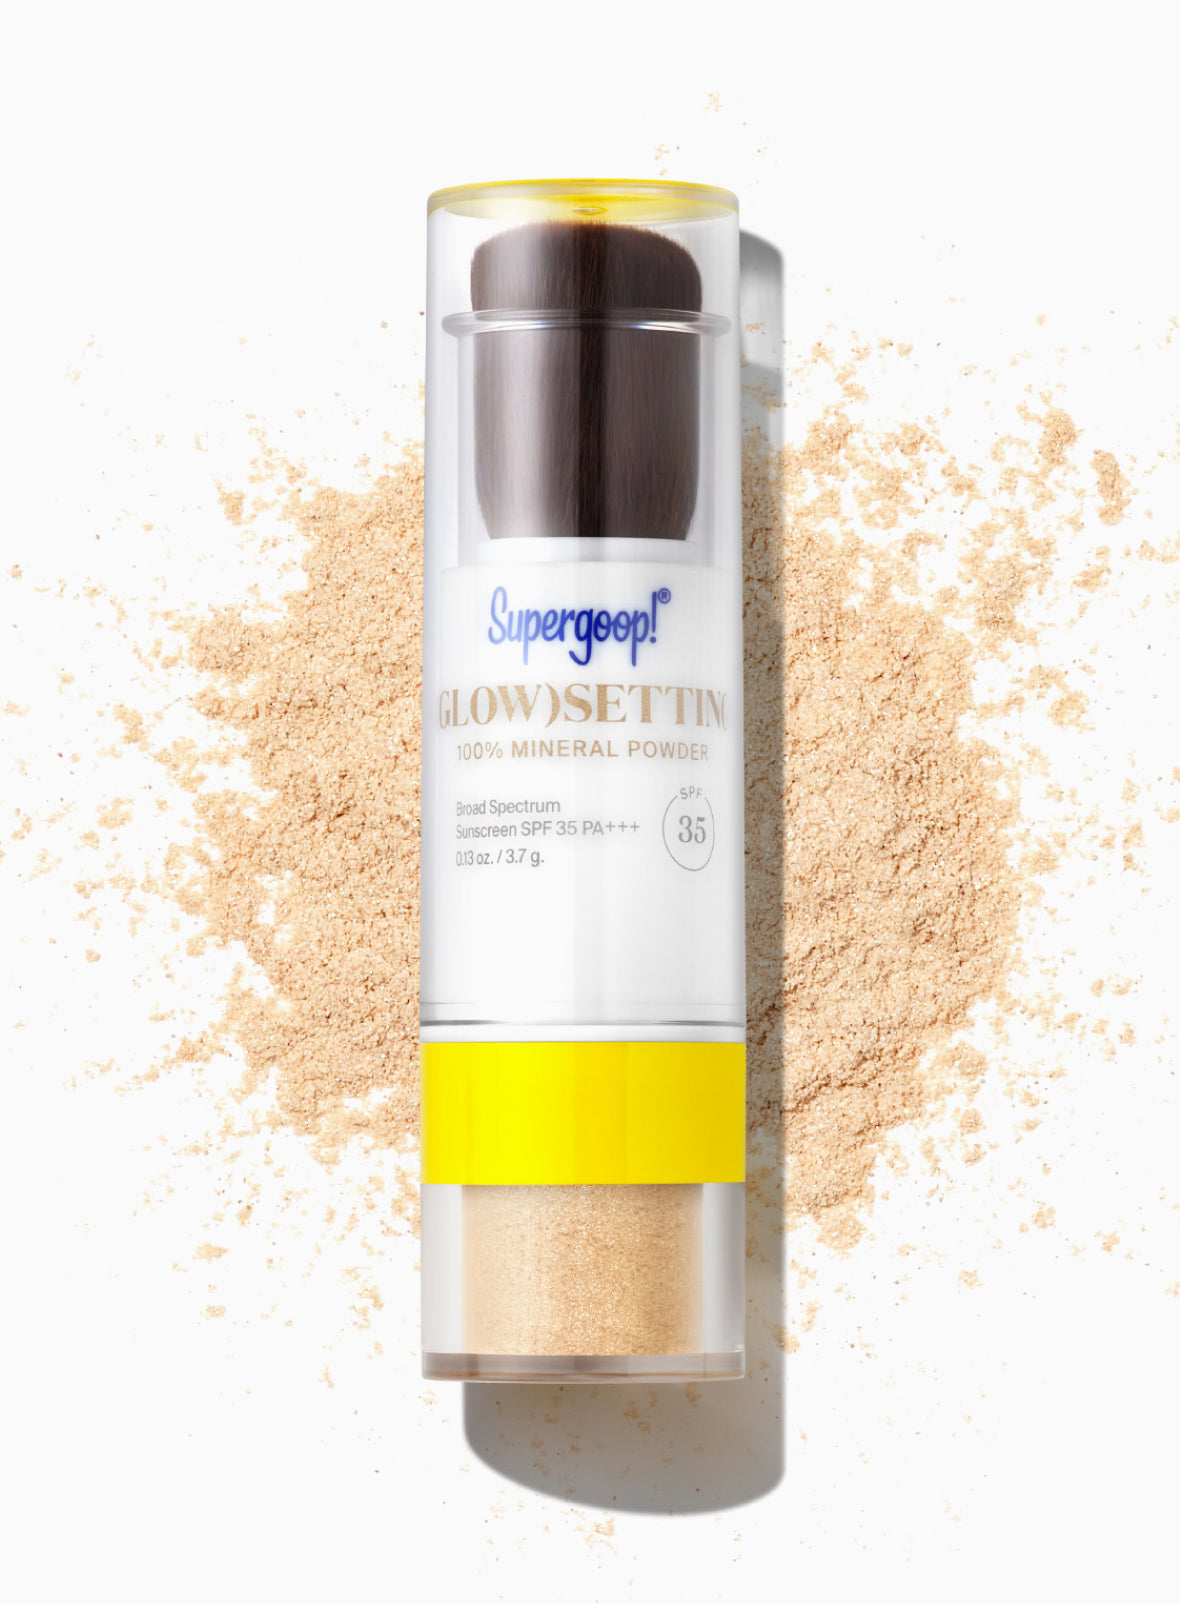 (Glow)setting 100% Mineral Powder SPF 35 Sunscreen 0.13 oz | Supergoop!